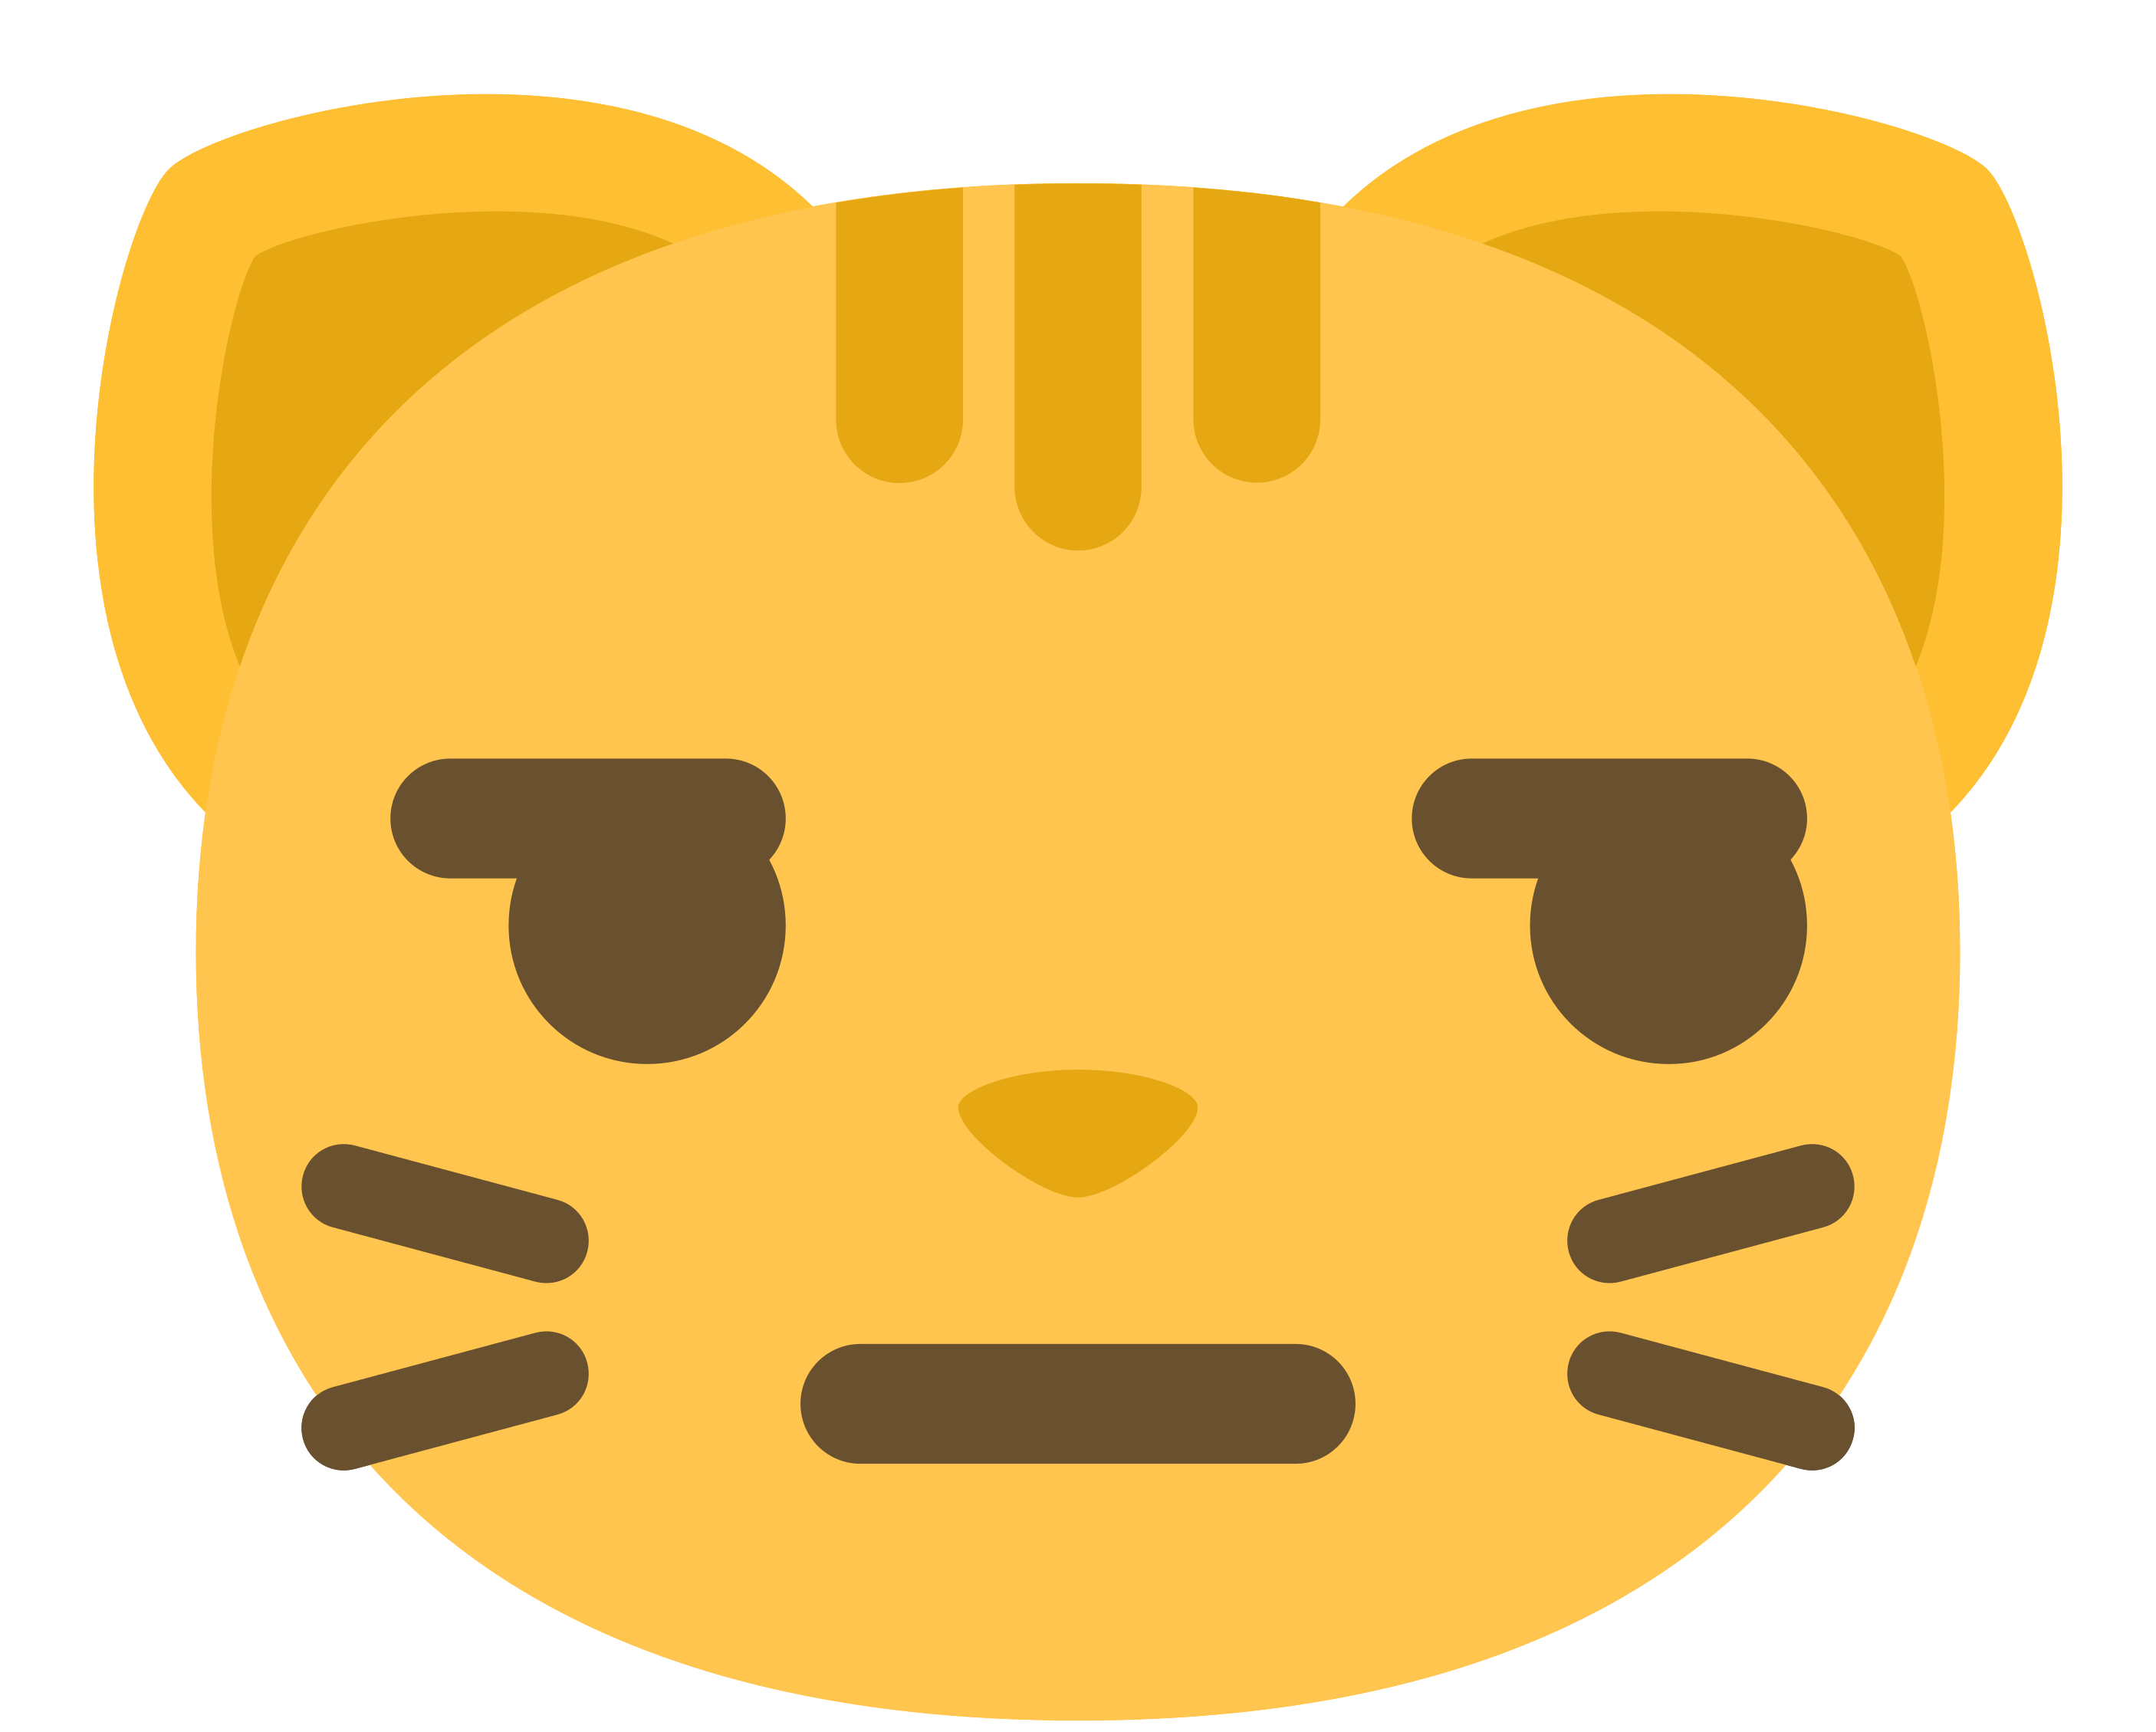 Kedi yüz emoji PNG indir Resim